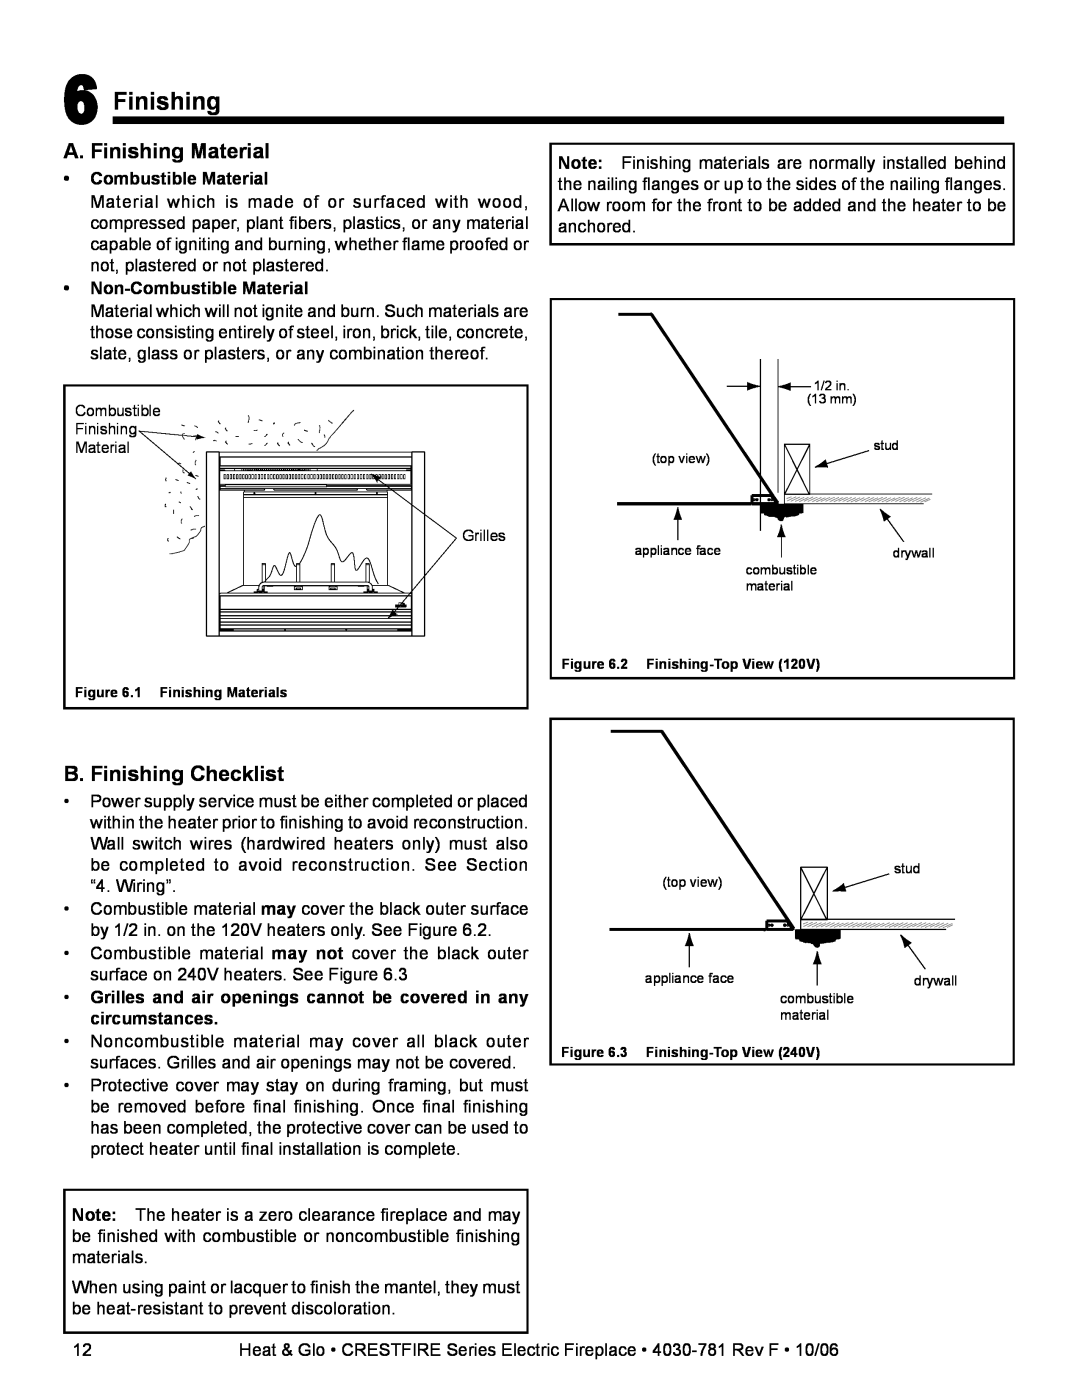 Heat & Glo LifeStyle CF550E-B owner manual A. Finishing Material, B. Finishing Checklist 